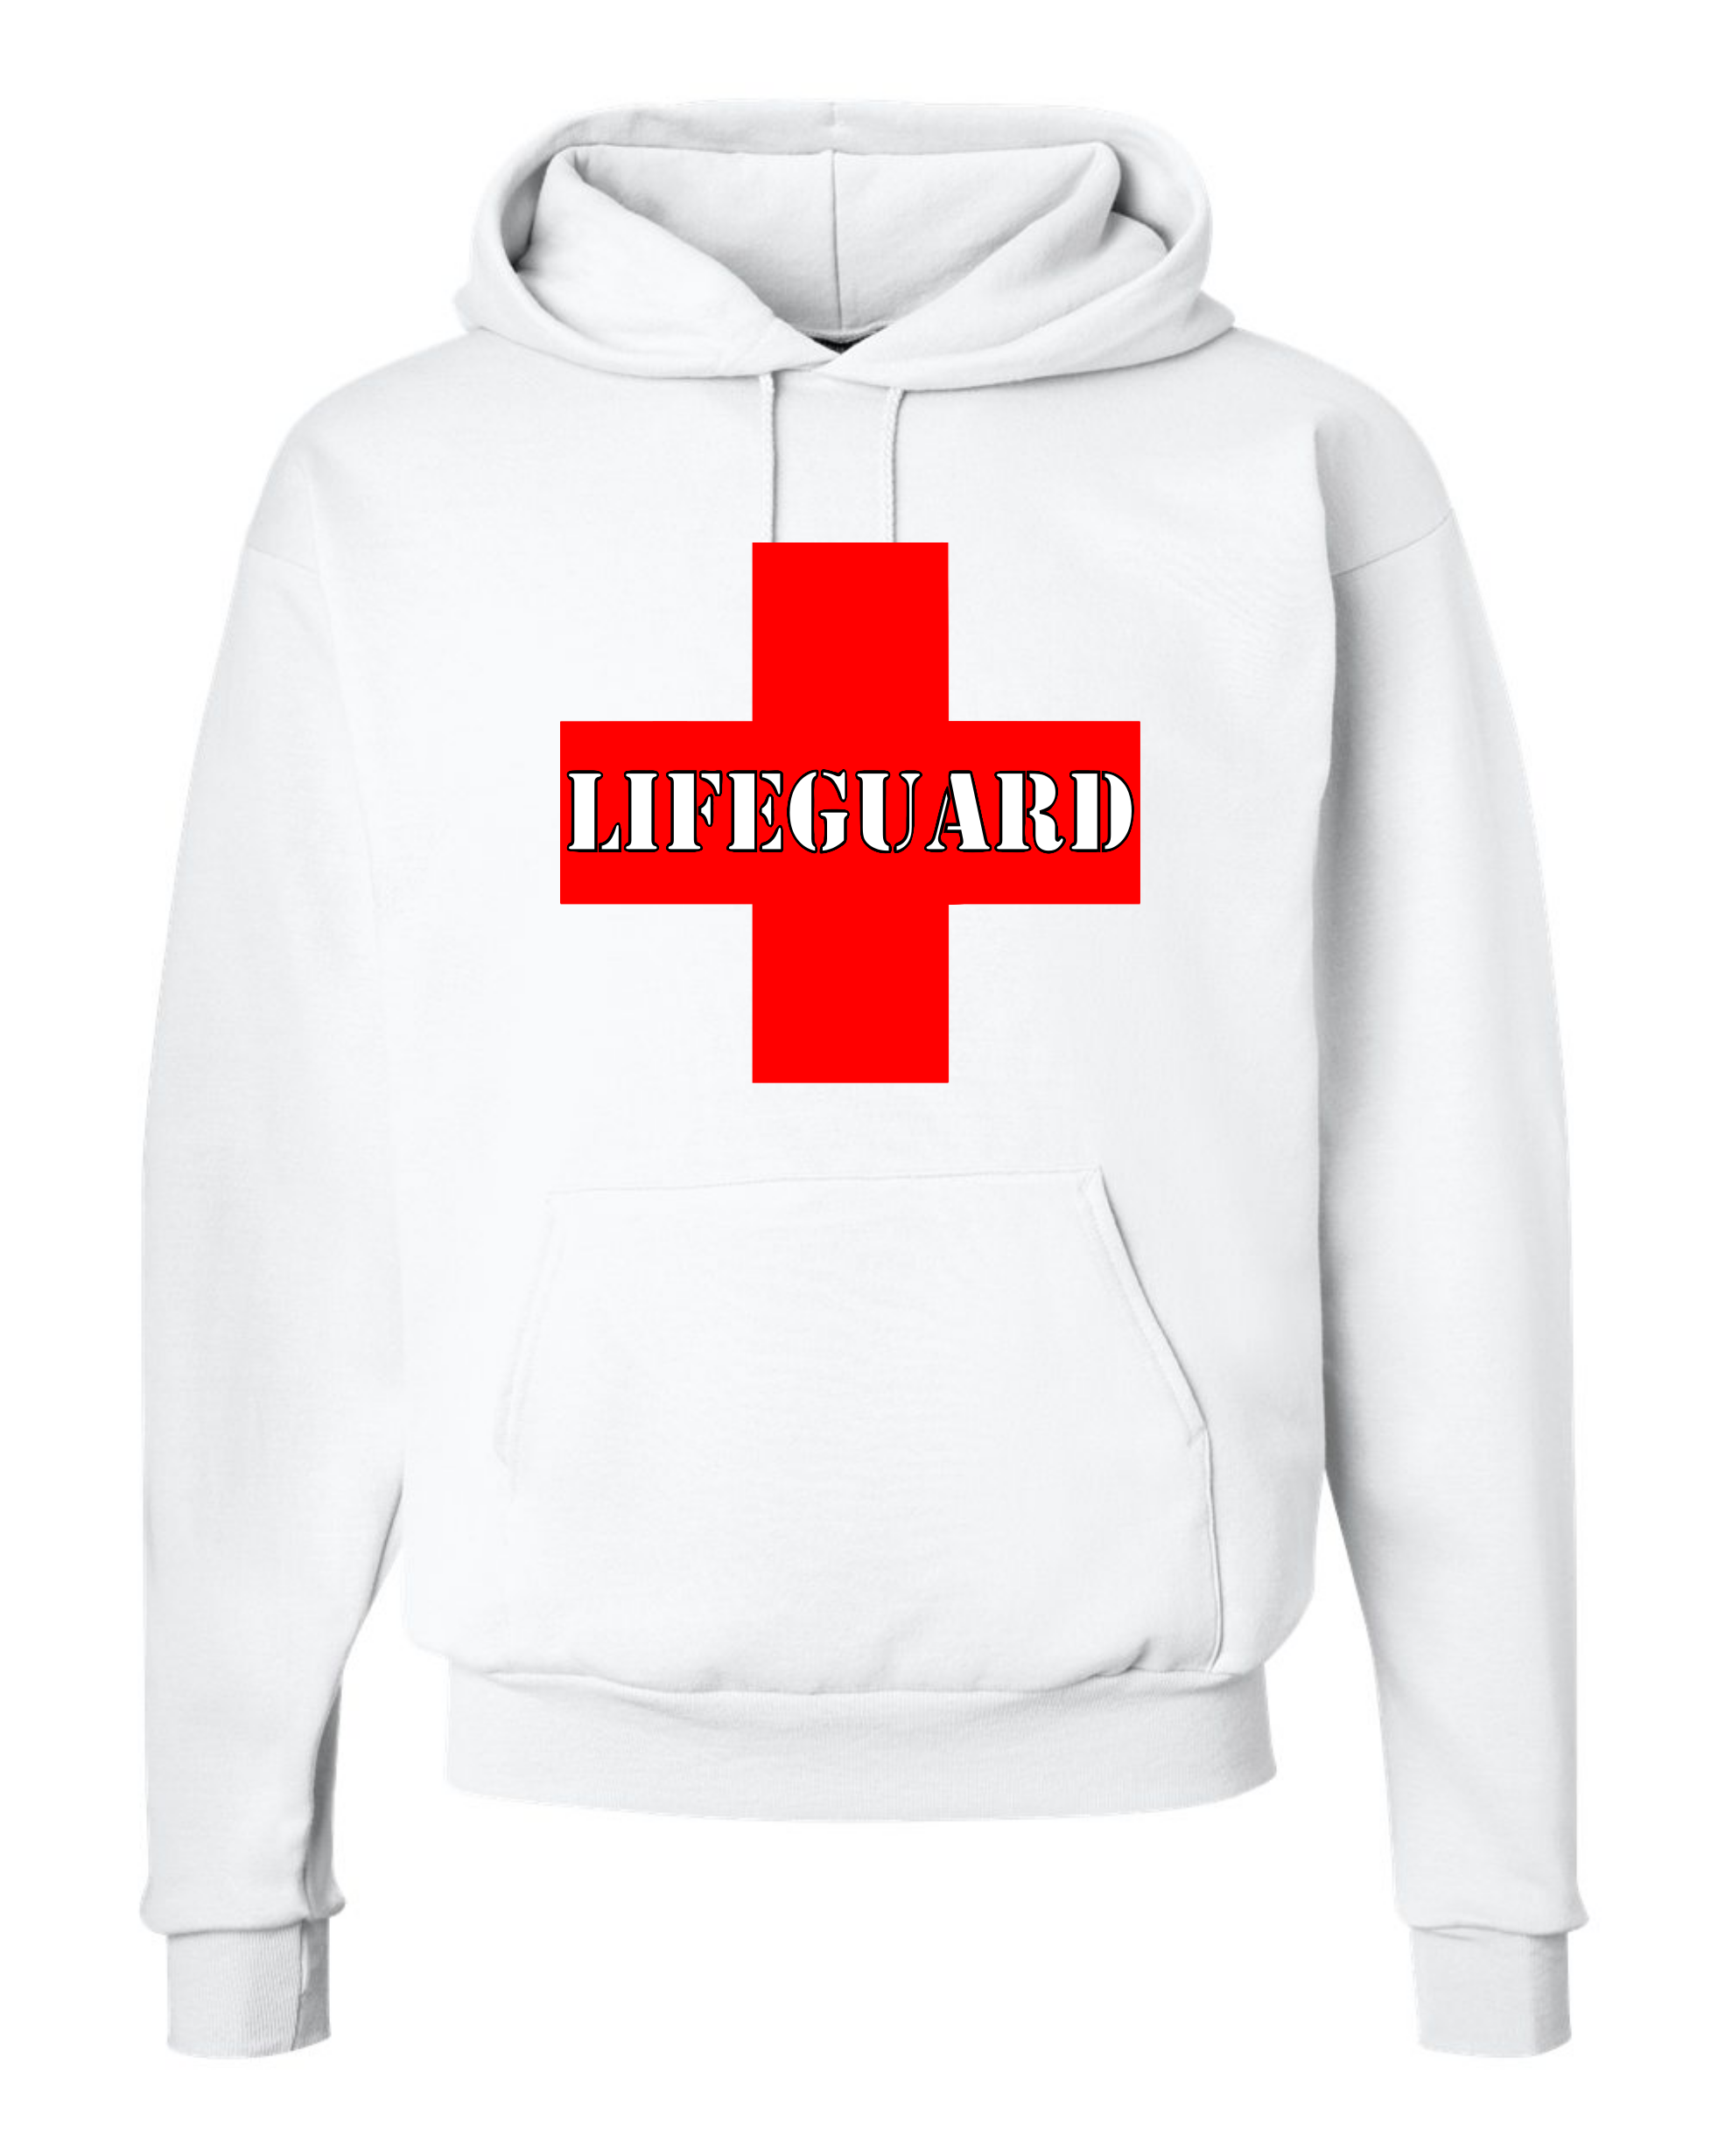 Lifeguard – Hoodie Sweatshirt (Cross Logo) - Unique Country Store & More